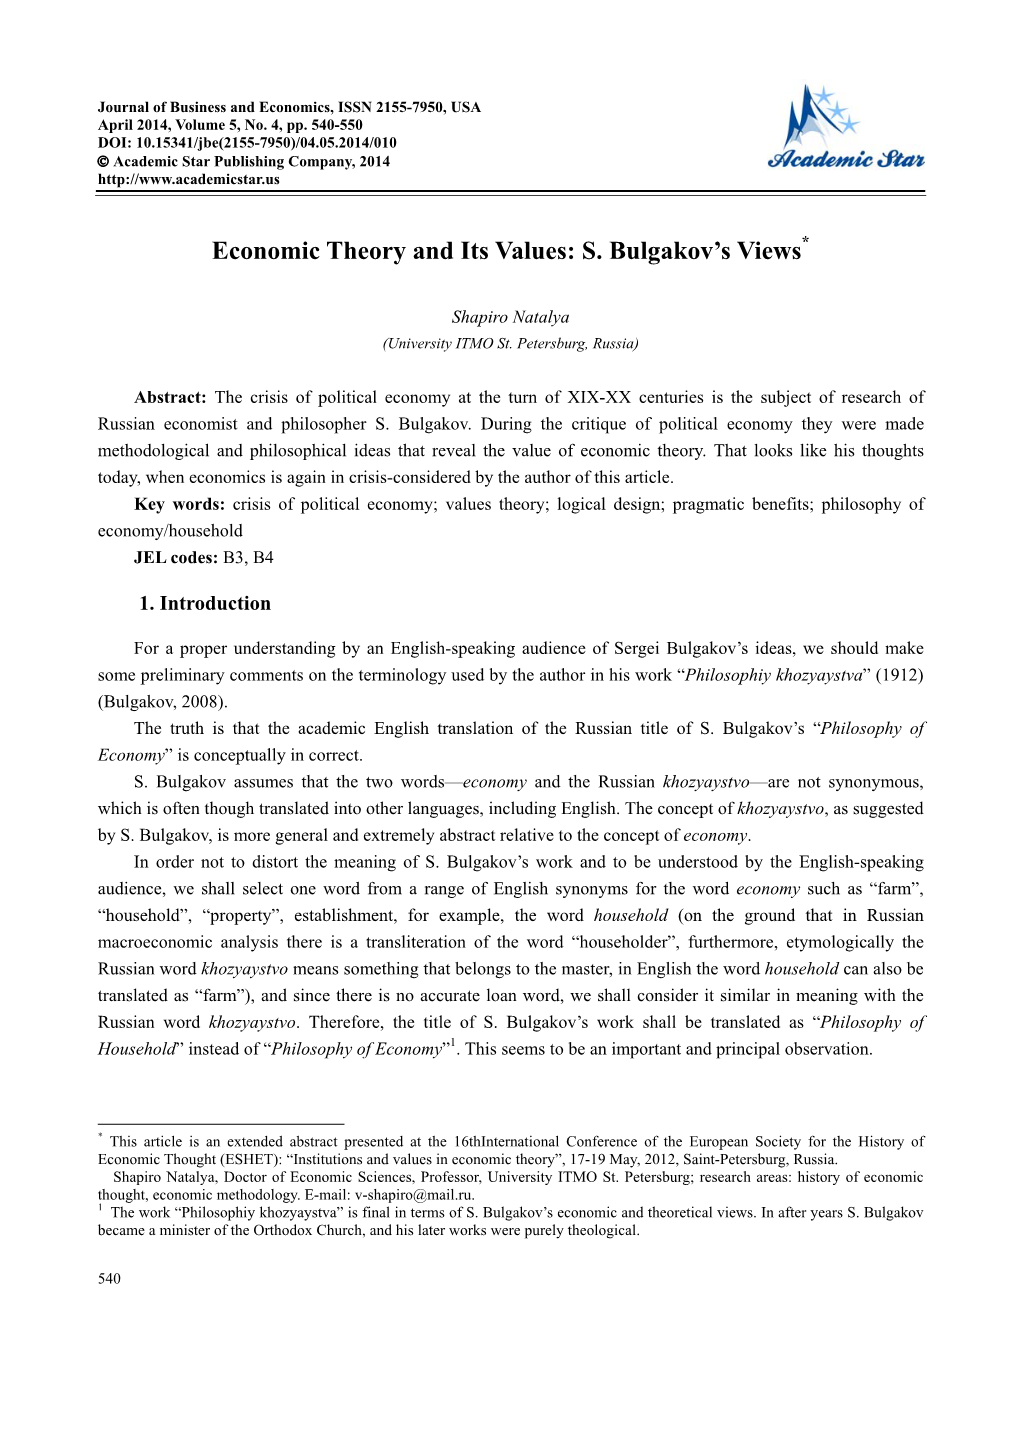 Economic Theory and Its Values: S. Bulgakov's Views